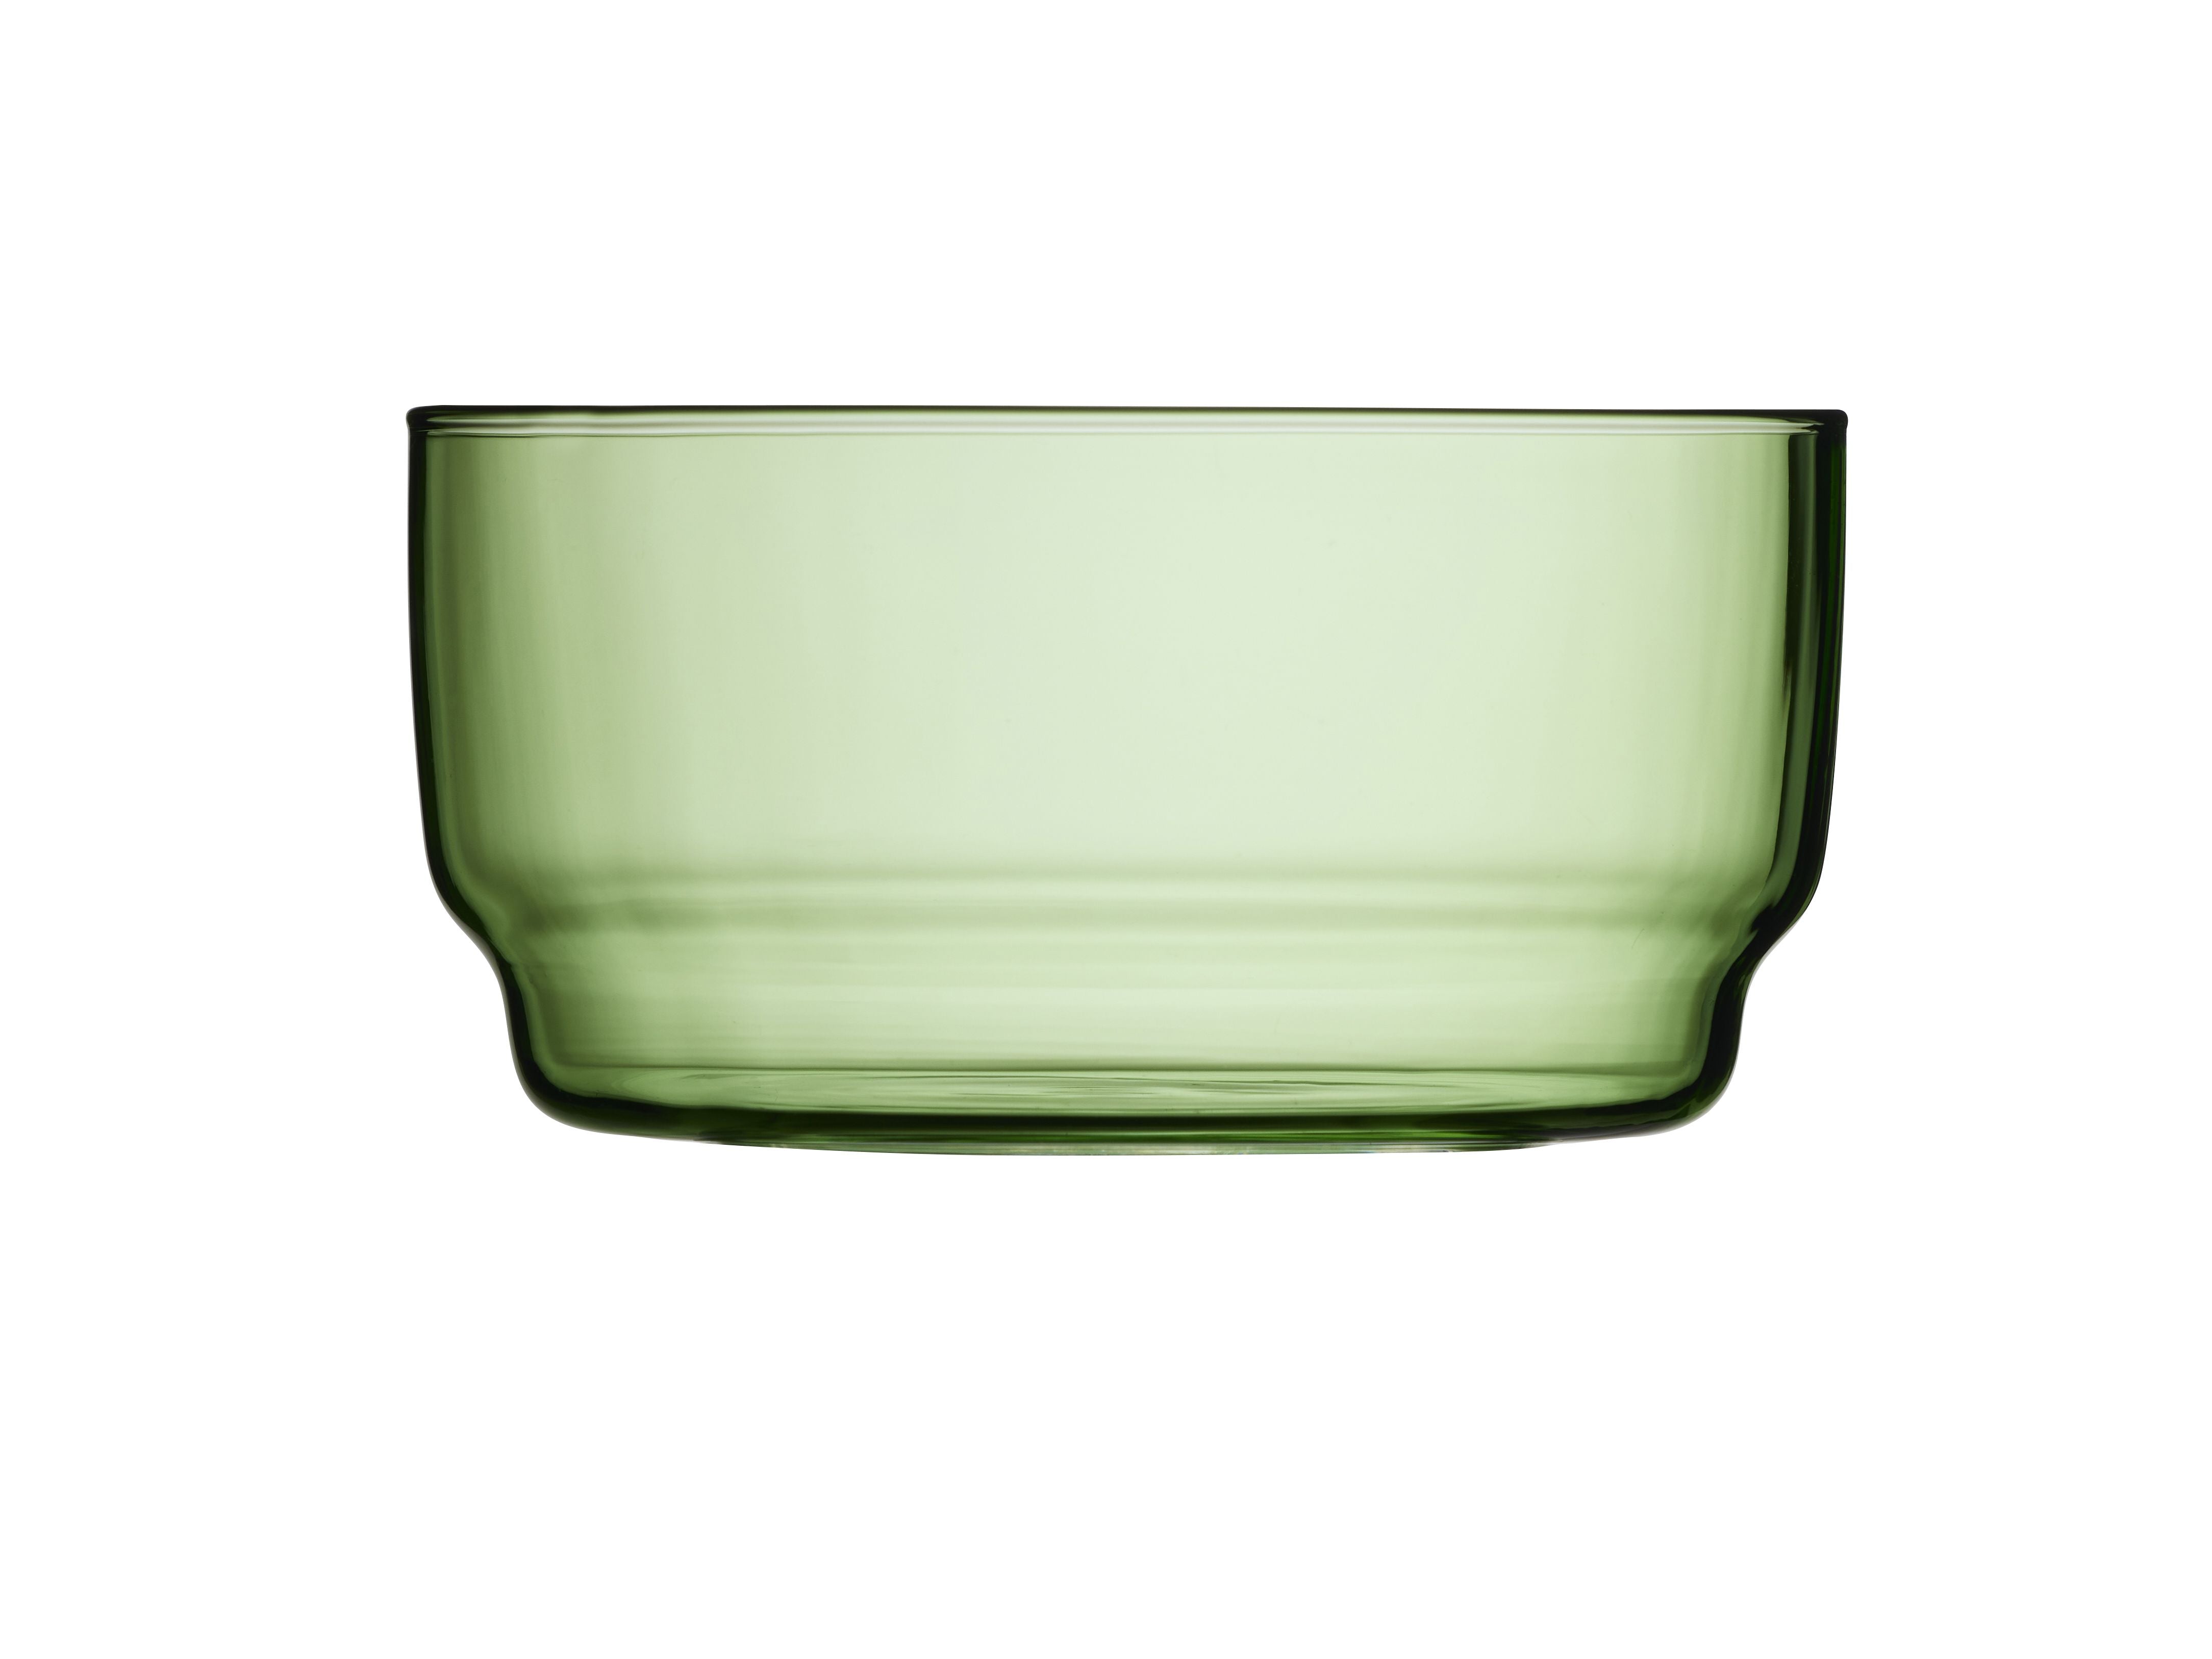 Lyngby Glas Torino -kom 12 cm 2 pc's, groen